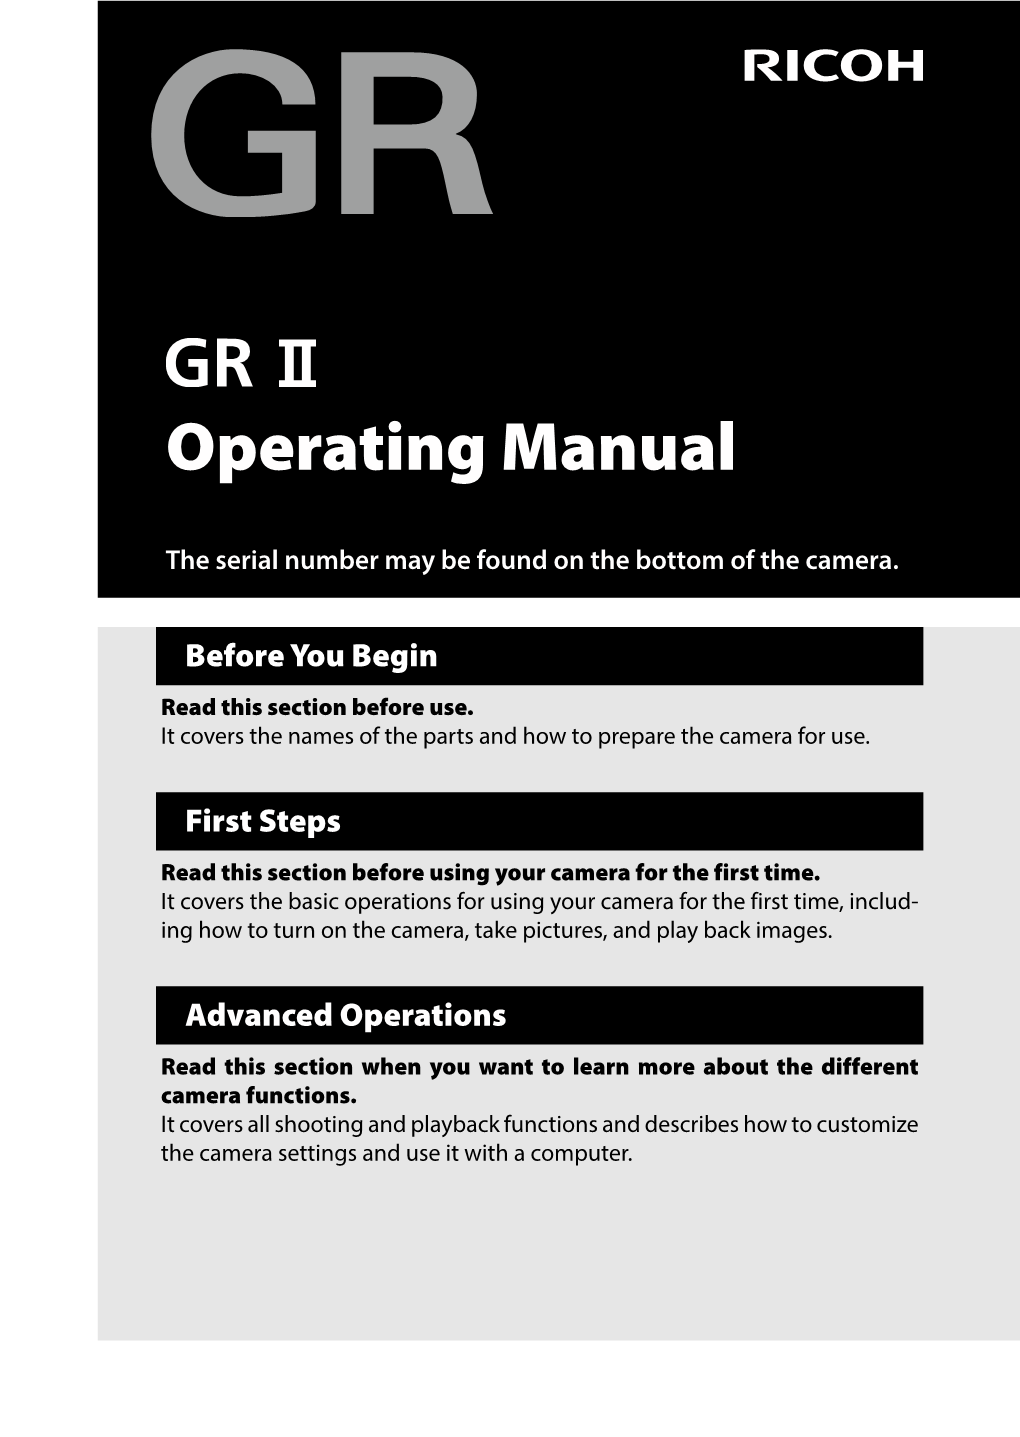 GR II Operating Manual